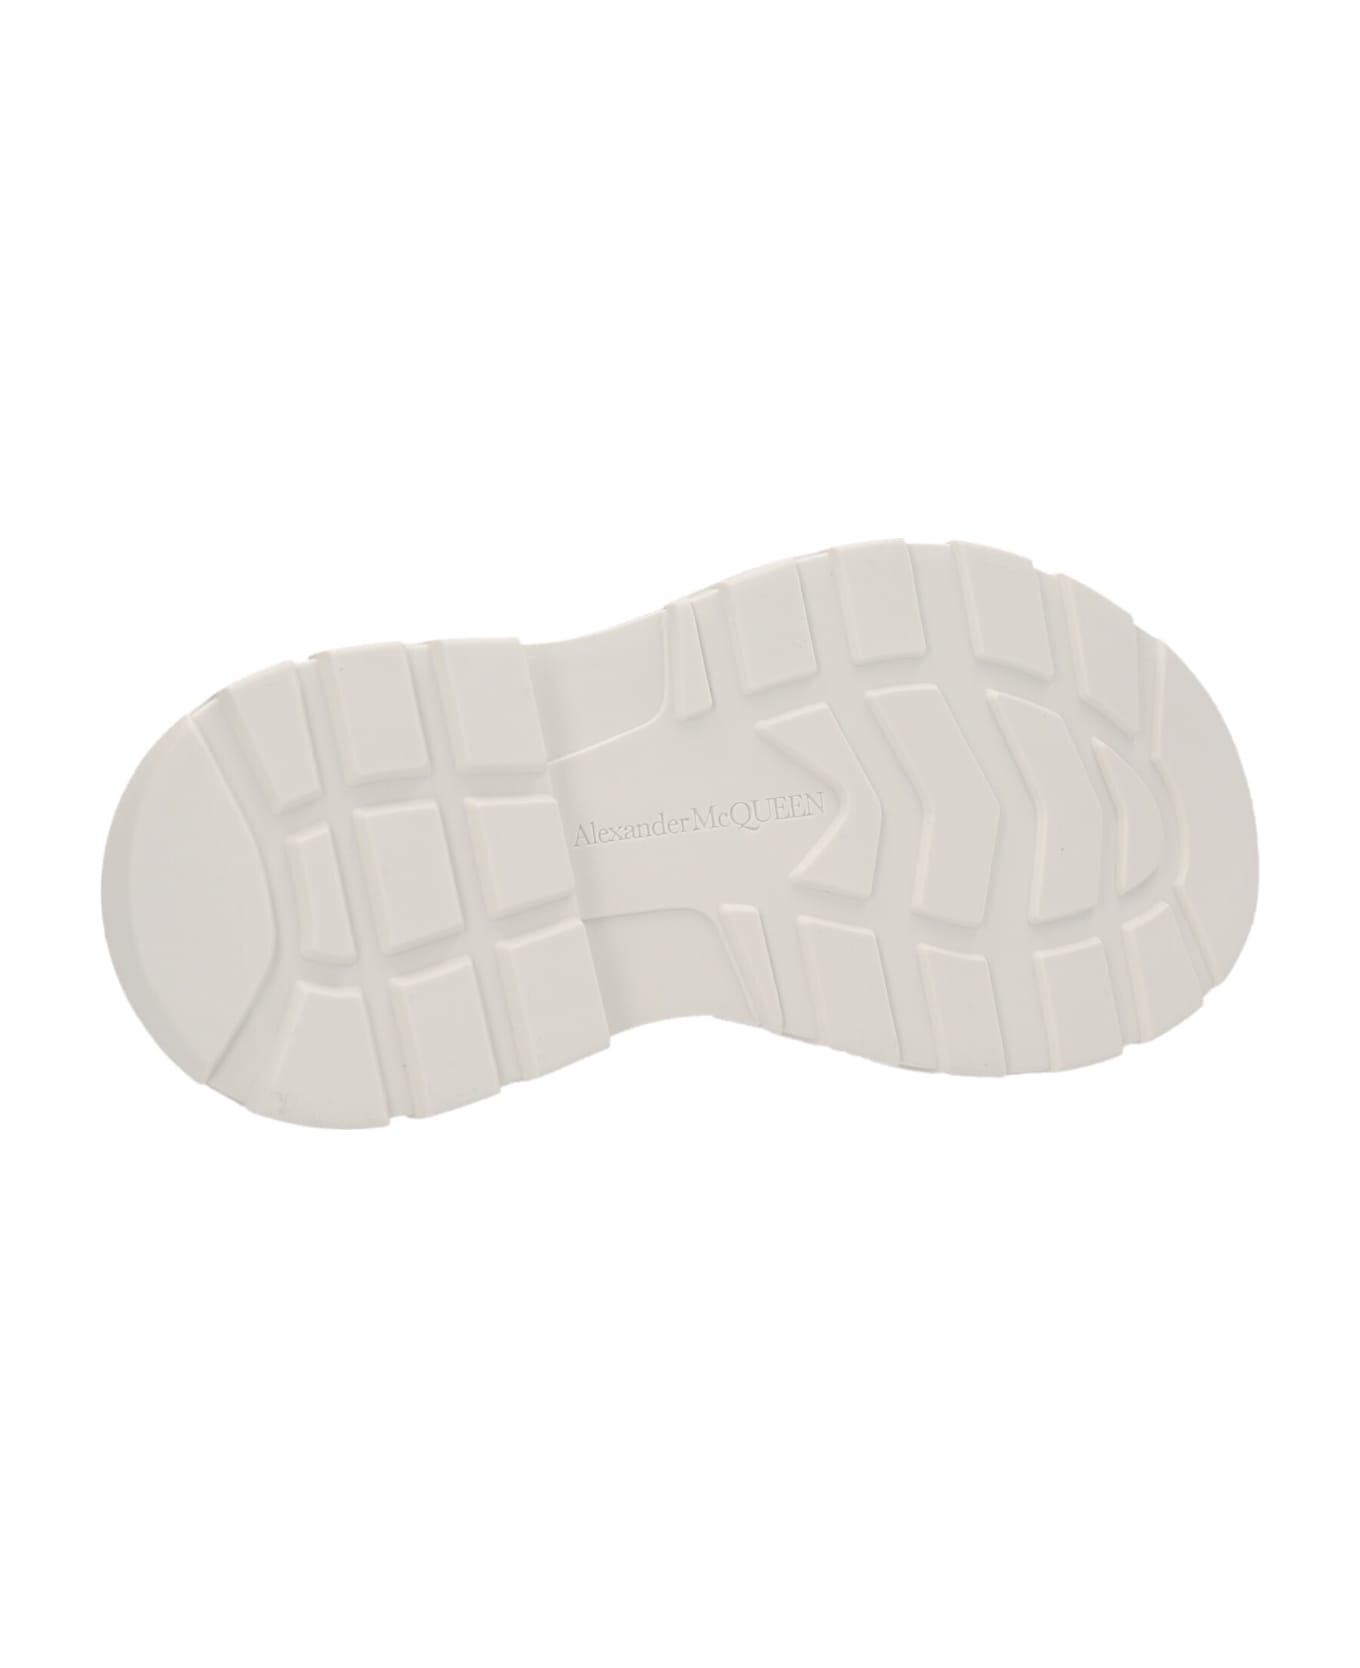 Alexander McQueen Tread Slick  Ankle Boots - White/Black